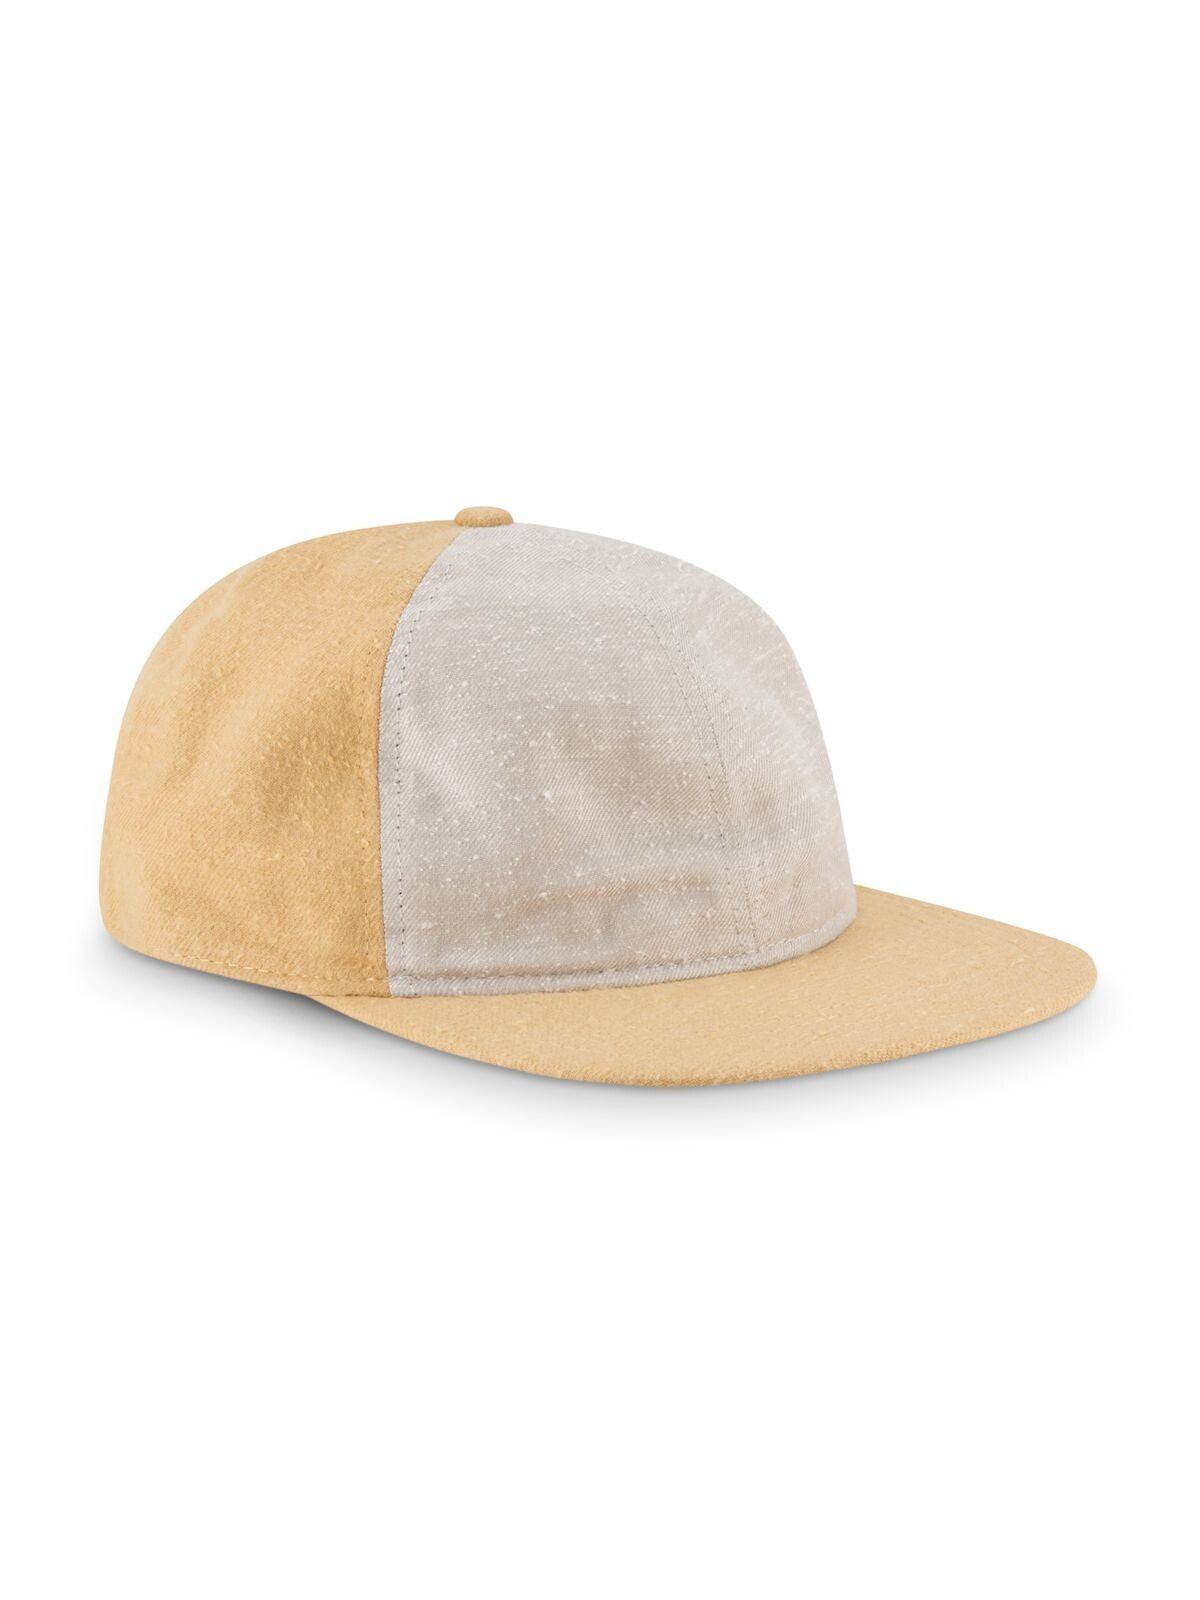 NEW ERA Mens Yellow Color Block Rayon Snapback Flat Brimmed Adjustable 9twenty Slub Cap Hat